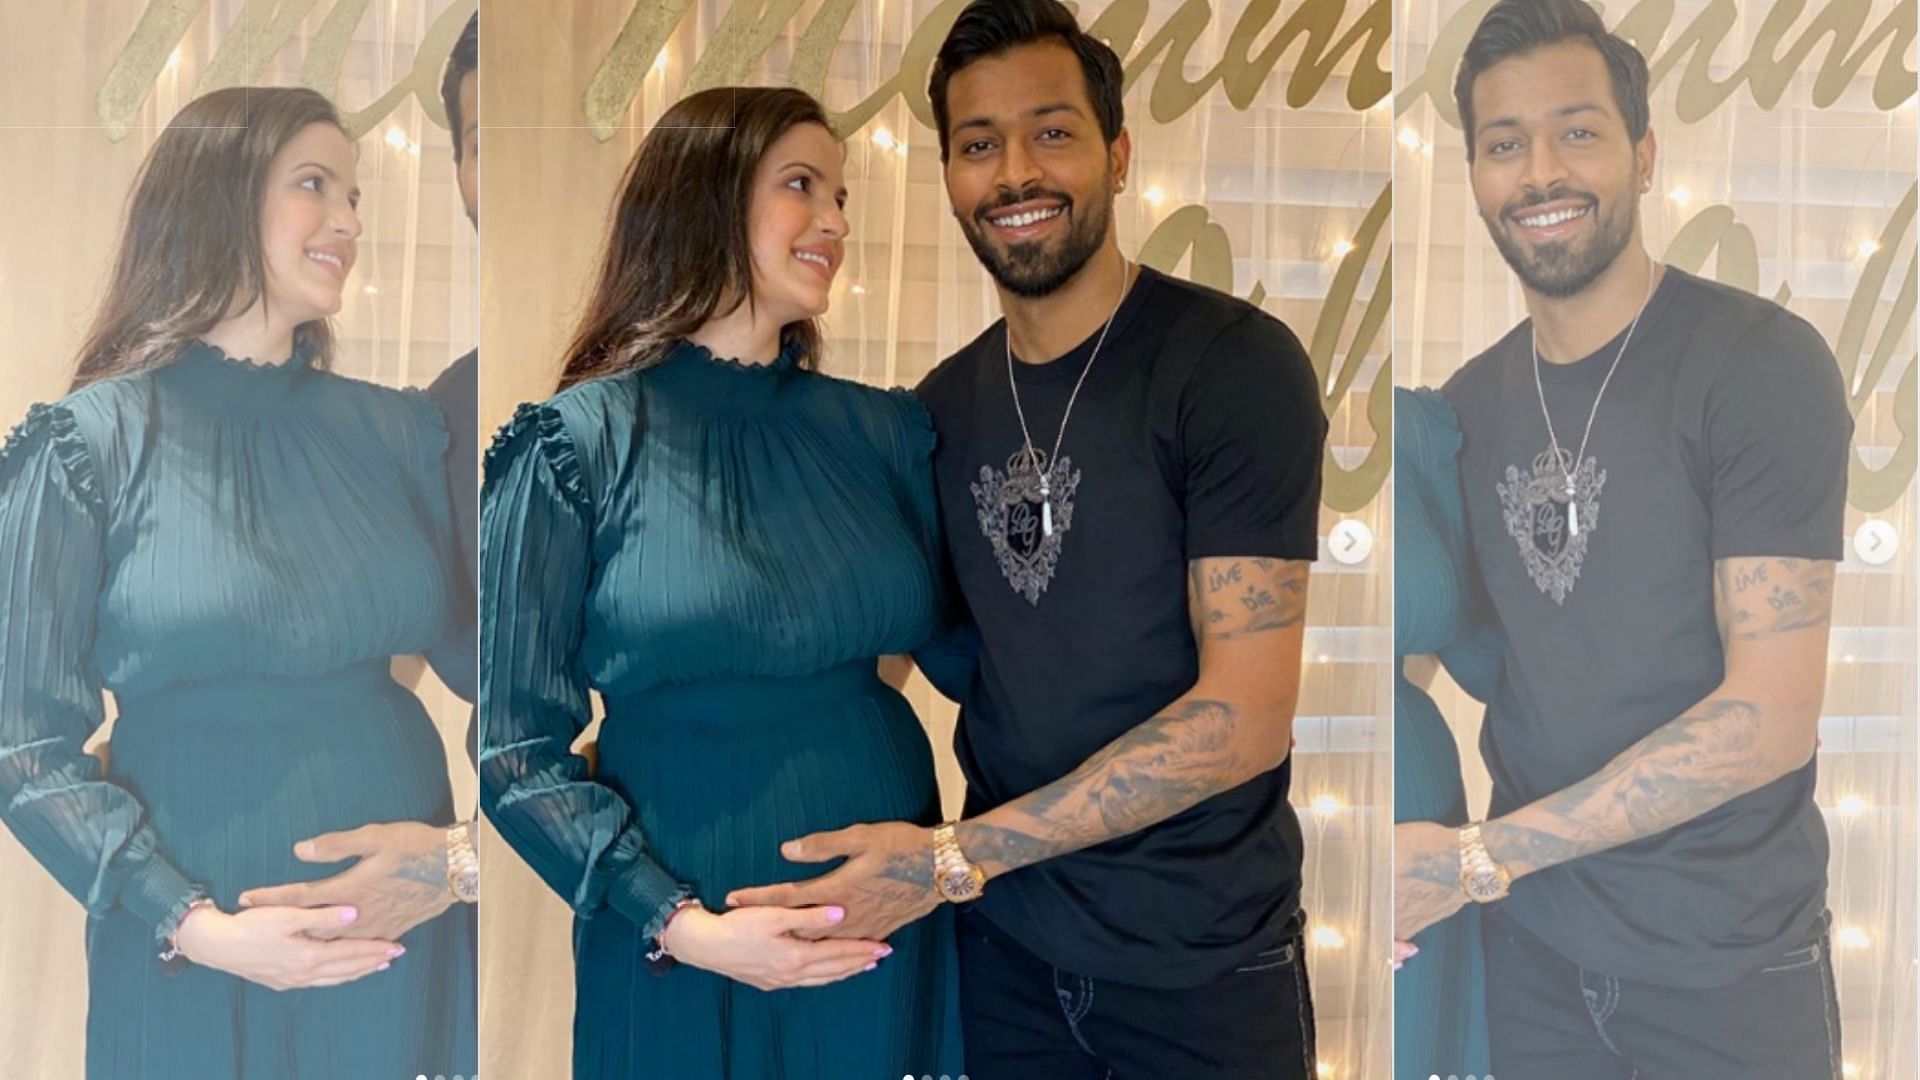 Virat Kohli led the congratulatory messages as Hardik Pandya announced he was having a baby with fiance Natasa Stankovic.